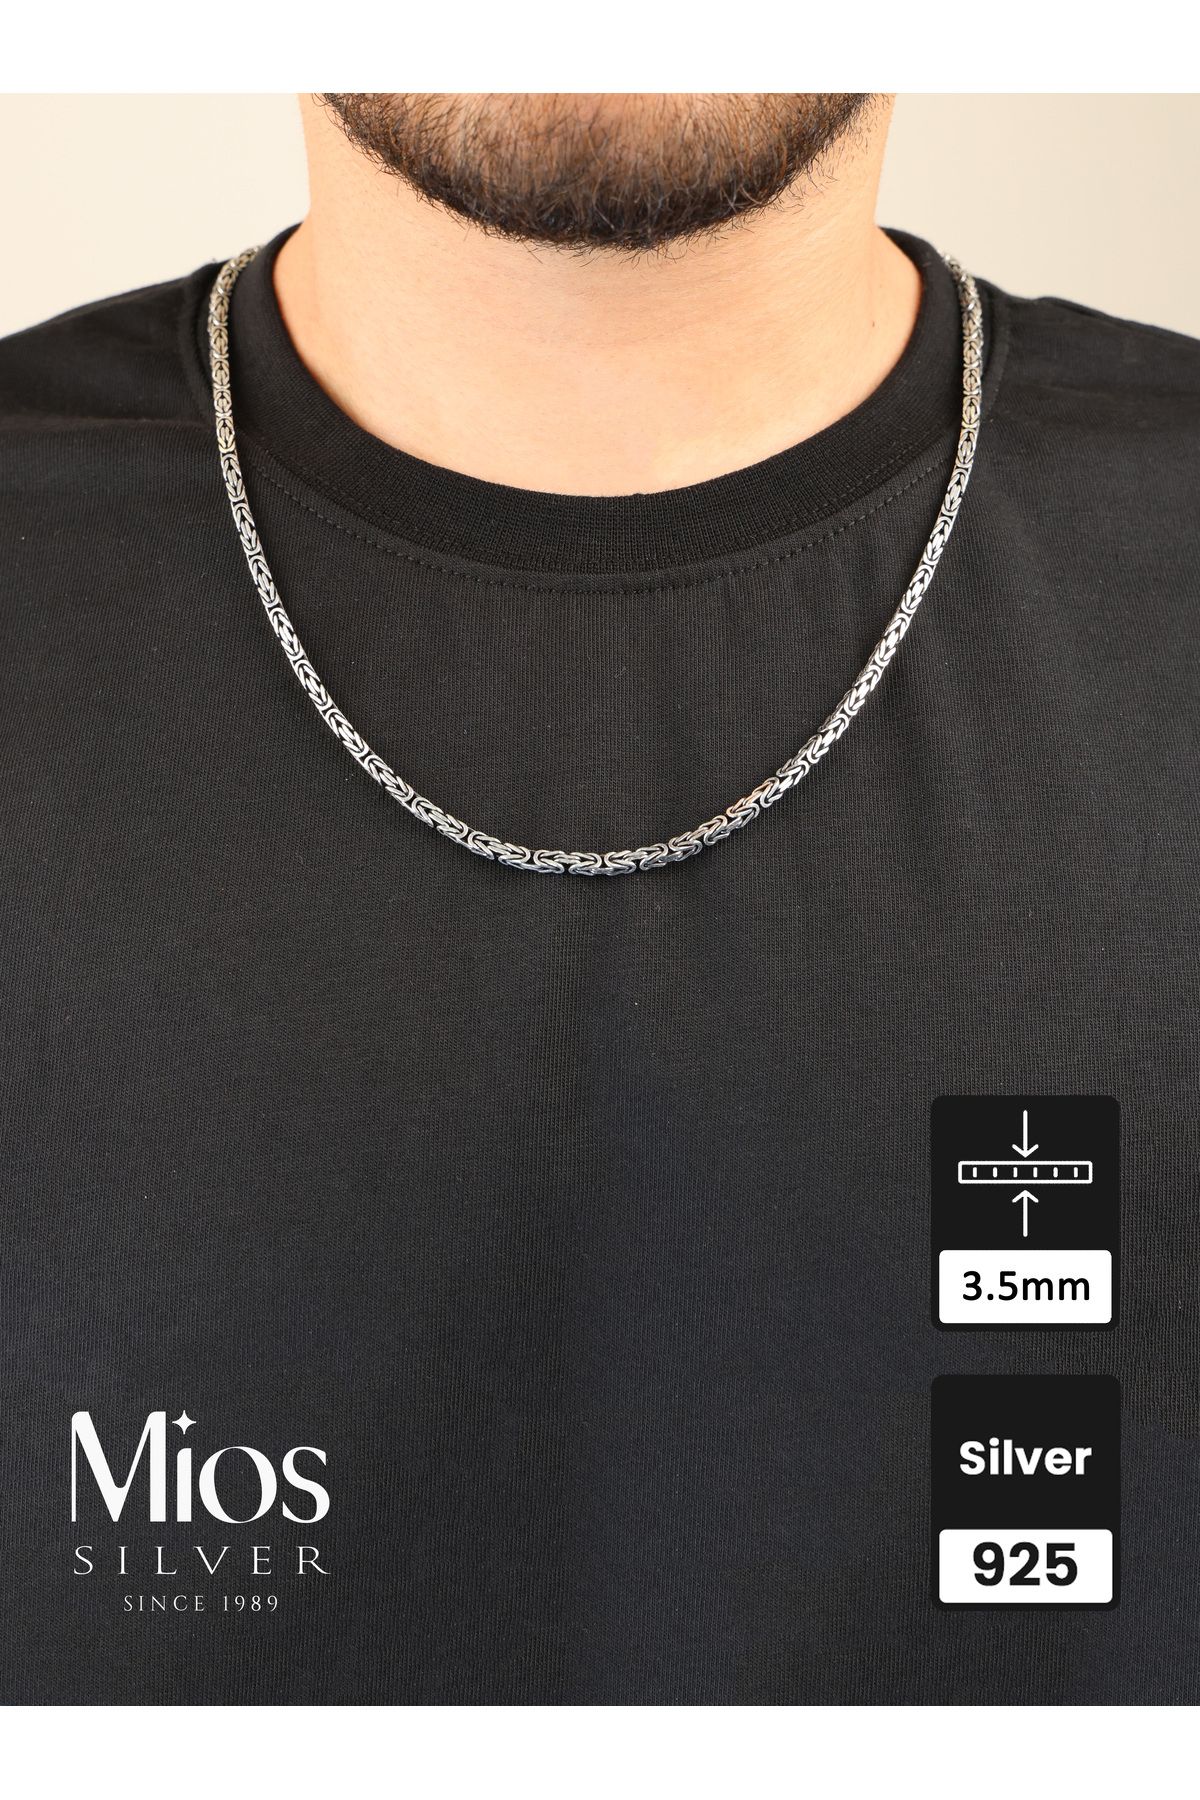 Mios Silver 3.5mm Kare Kral 925 Ayar Gümüş Zincir Kolye